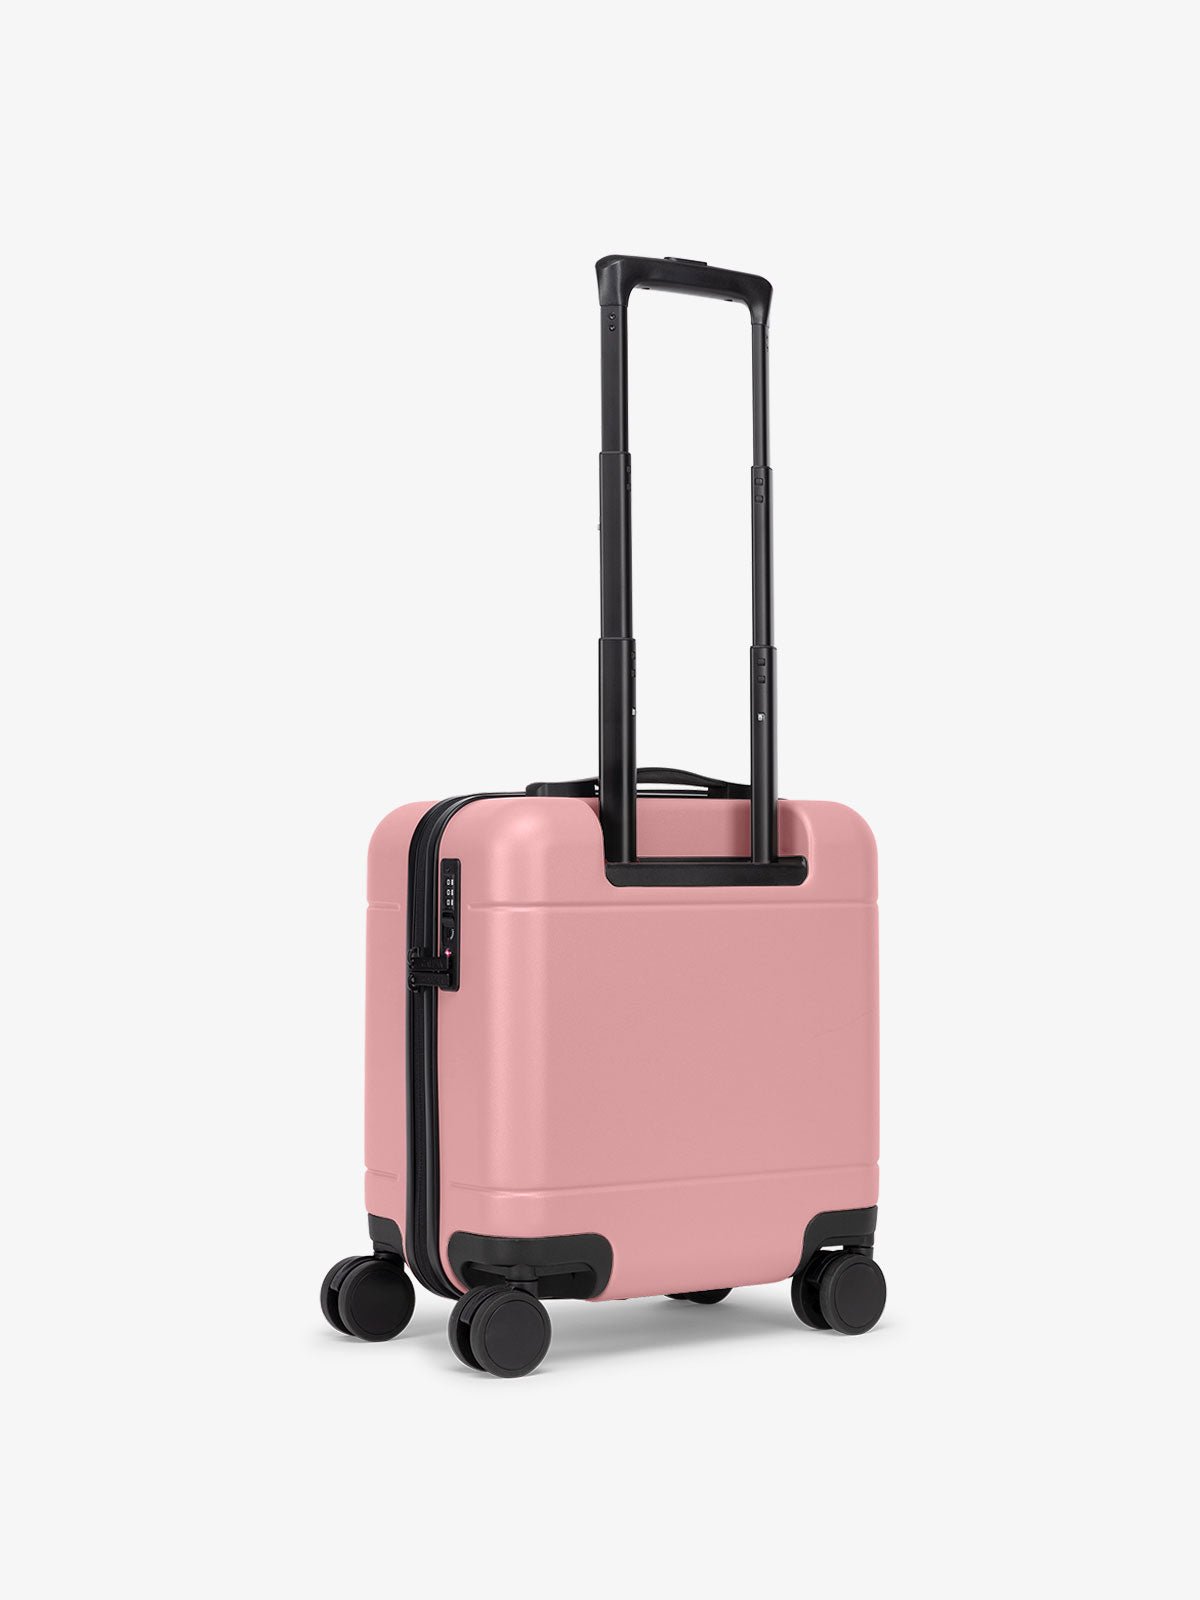 Mauve hue mini carry on luggage with telescopic handle